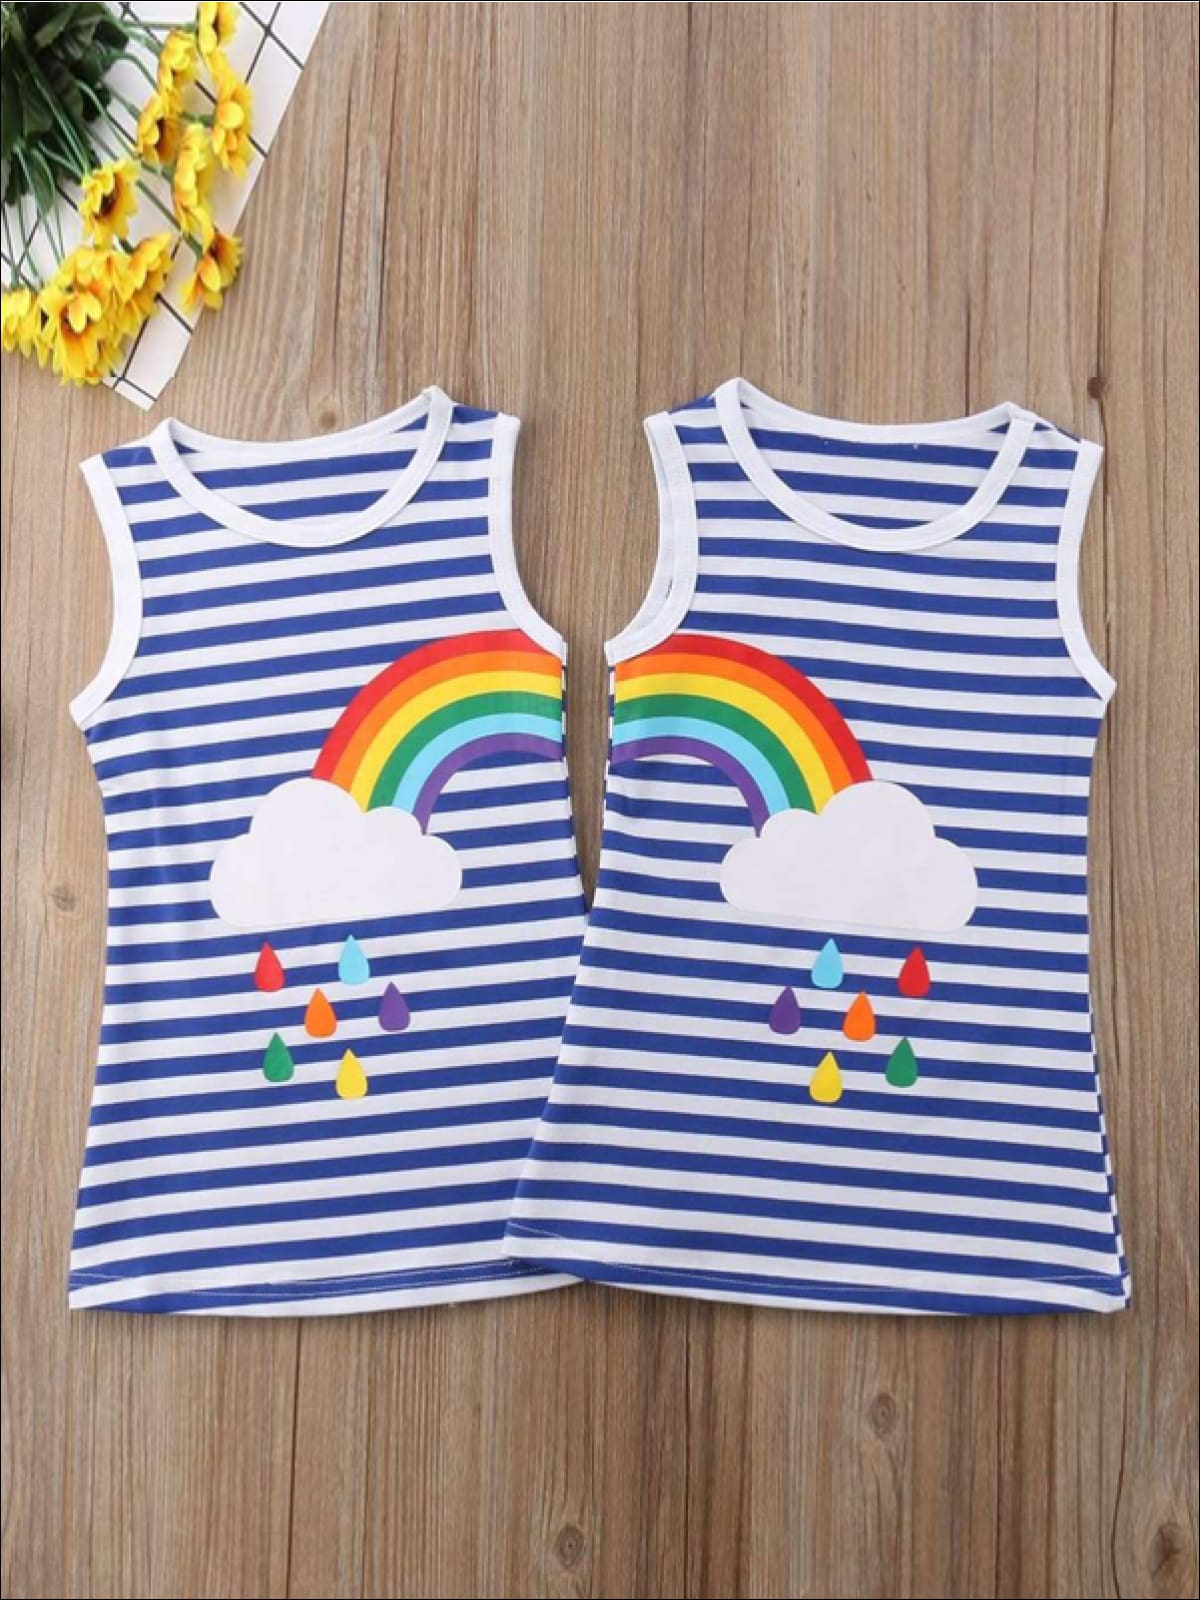 Girls Sleeveless Twinning Striped Rainbow Dress - Girls Casual Spring Dress